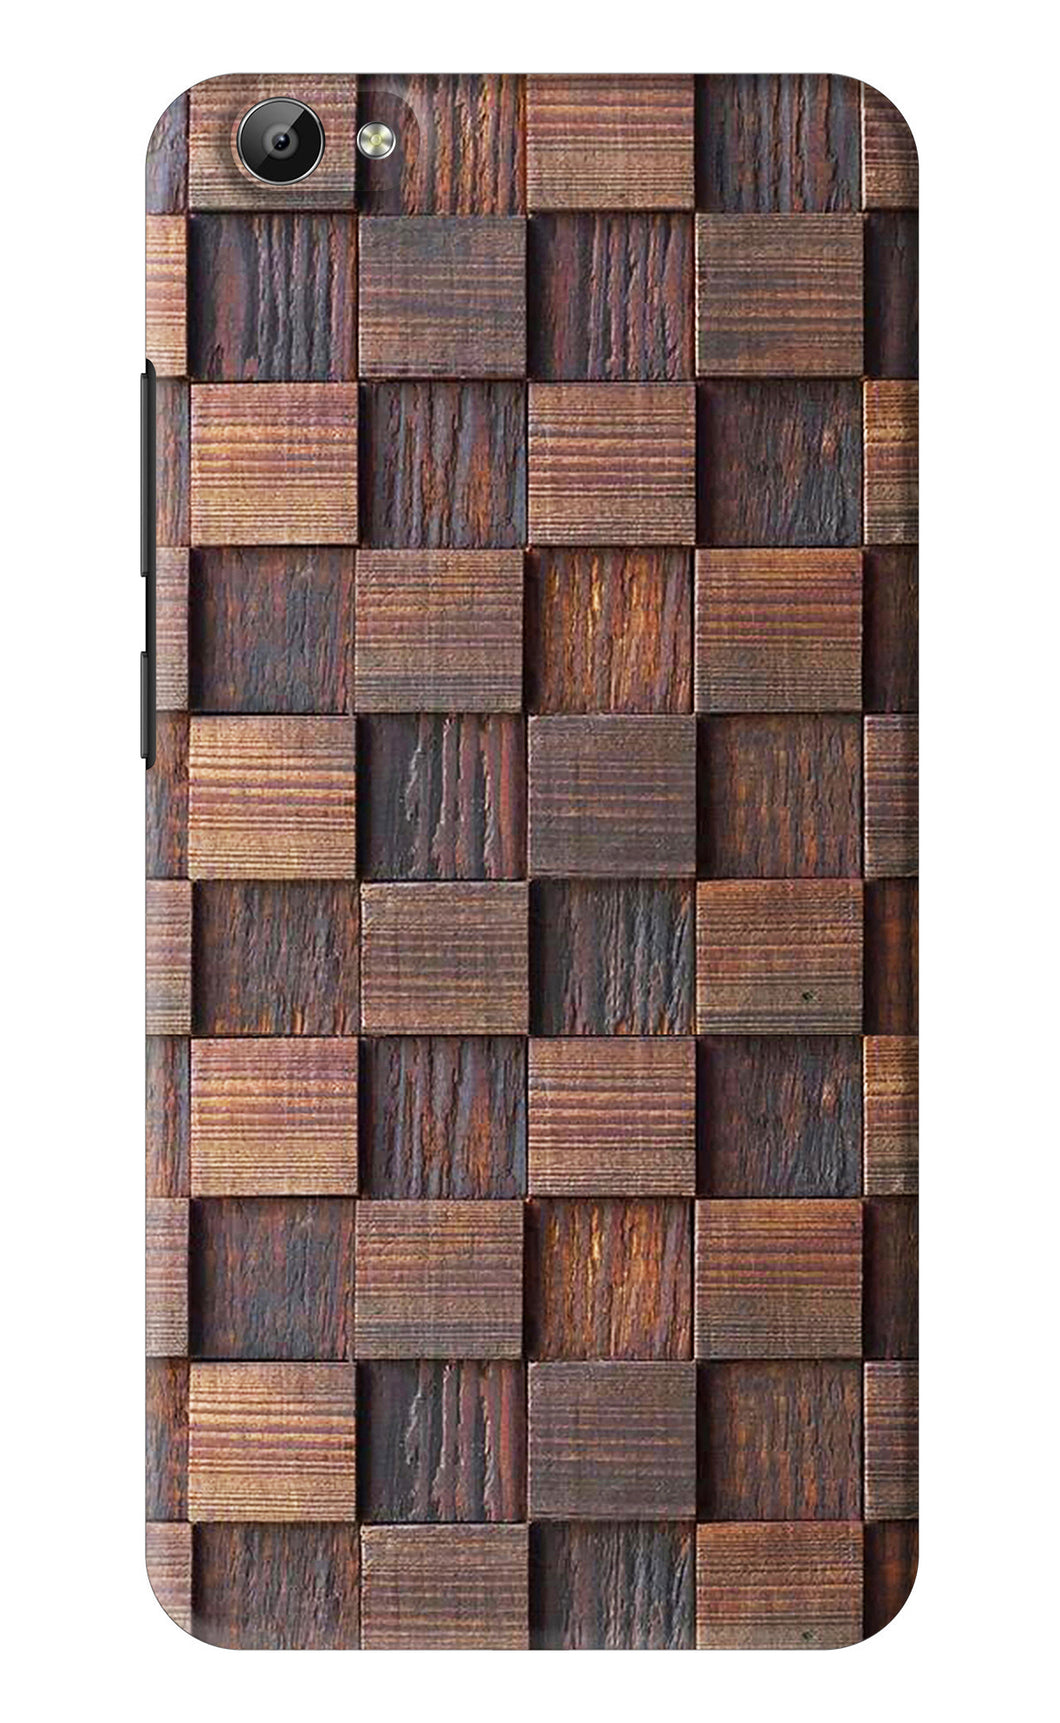 Wooden Cube Design Vivo Y66 Back Skin Wrap